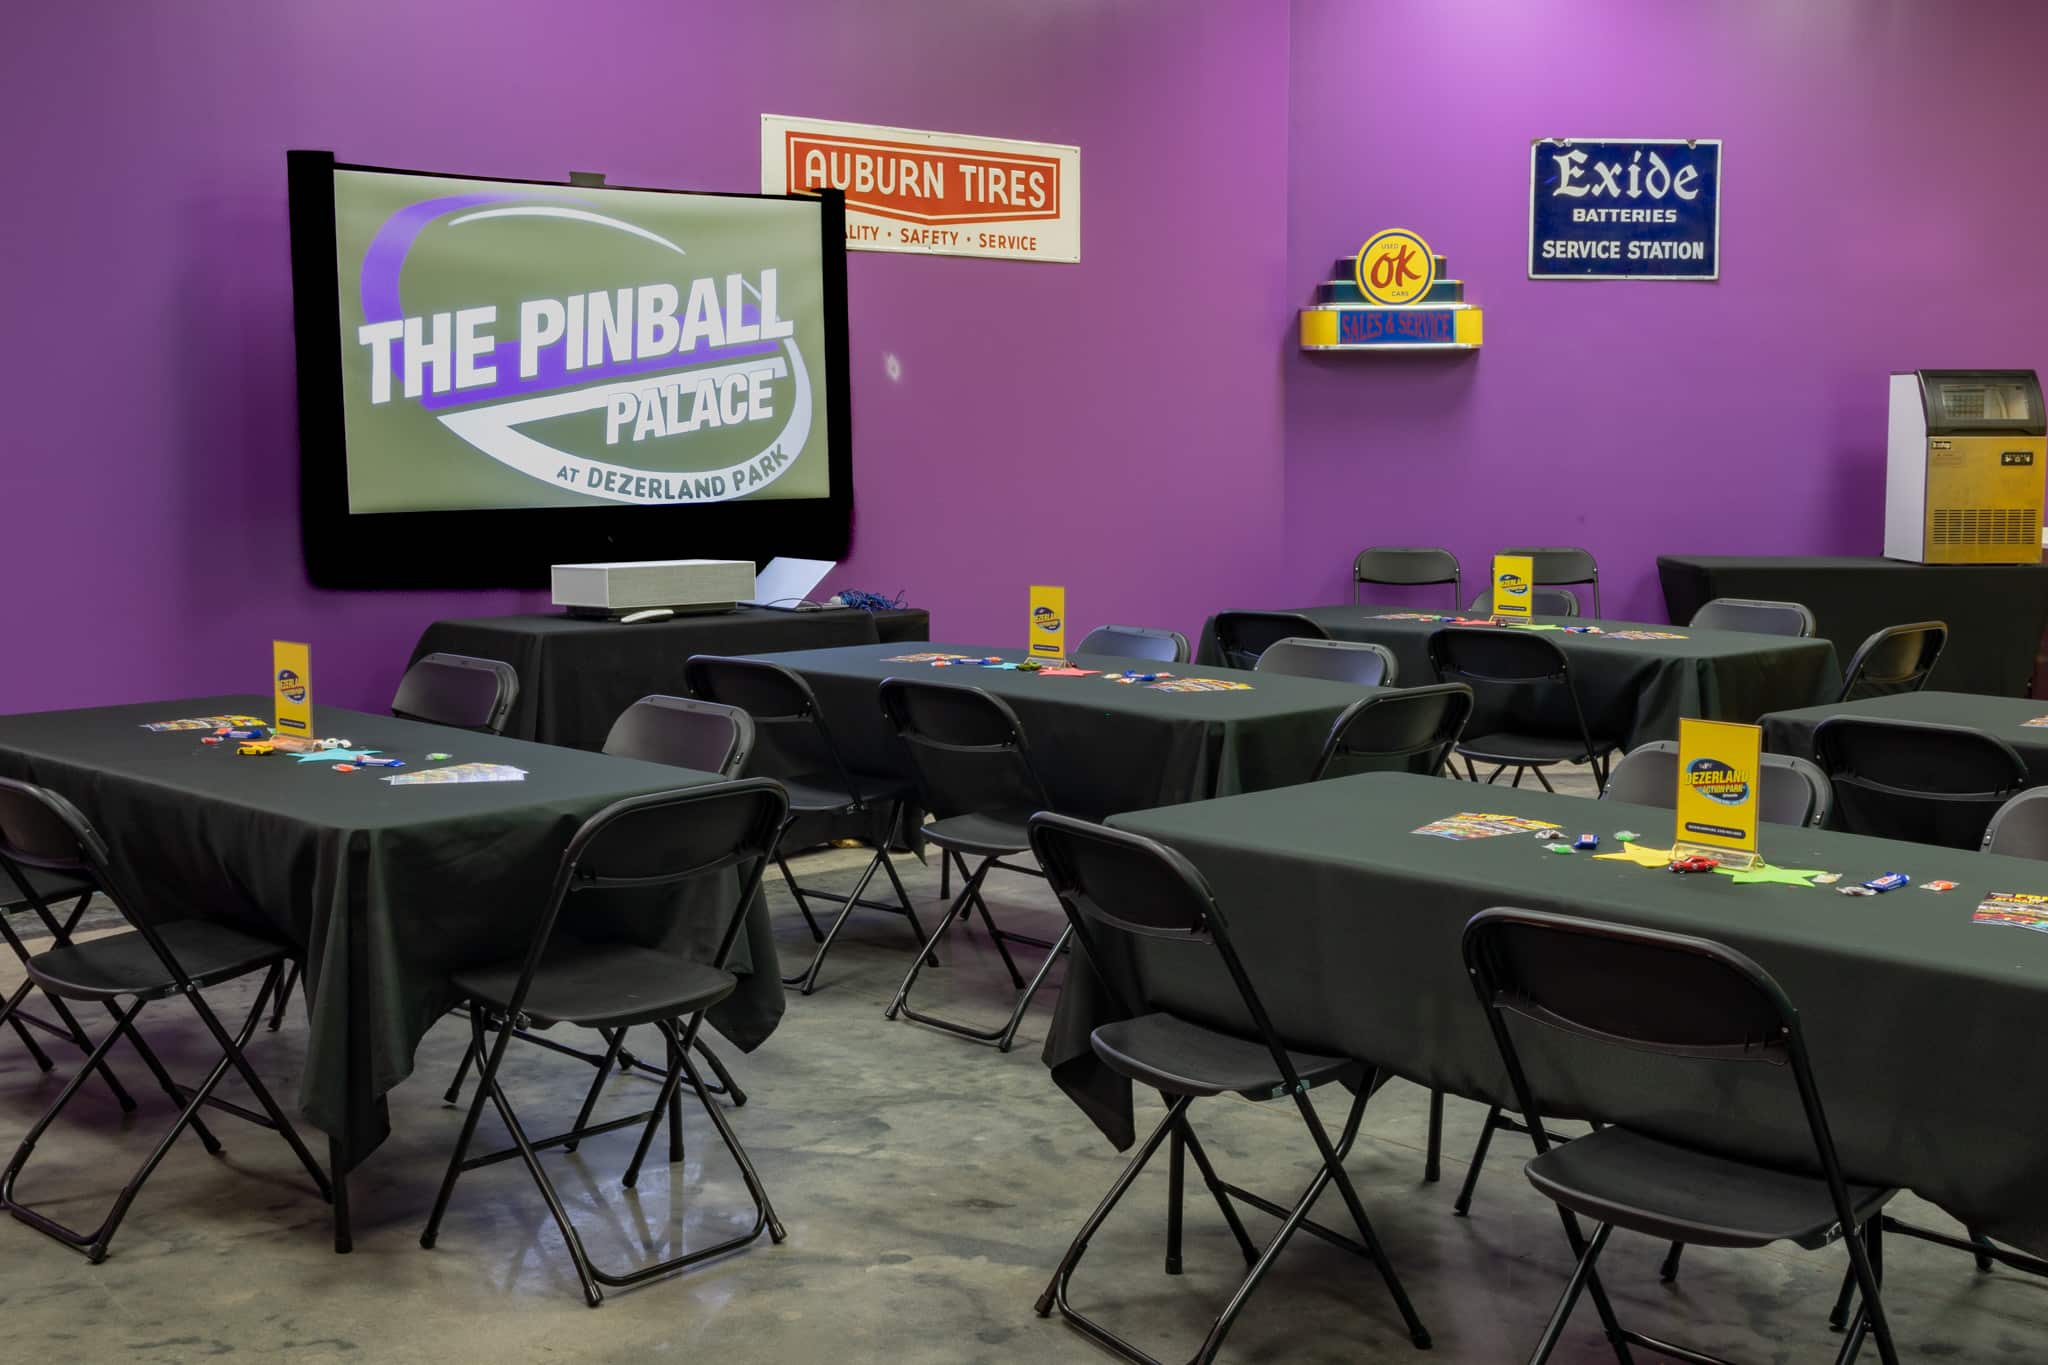 Pinball Palace Private Room Orlando Event Space at Dezerland Park